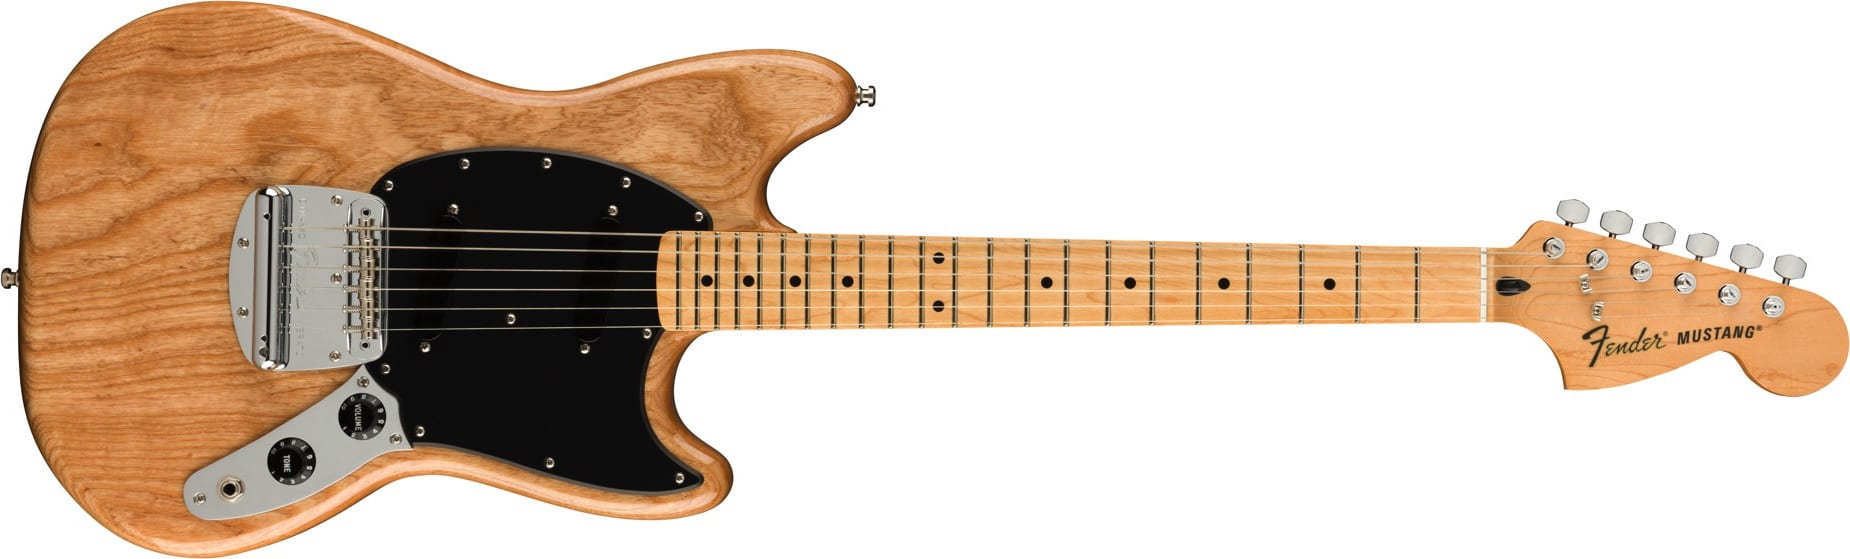 Fender Ben Gibbard Artist Series Mustang: Hear it in action here